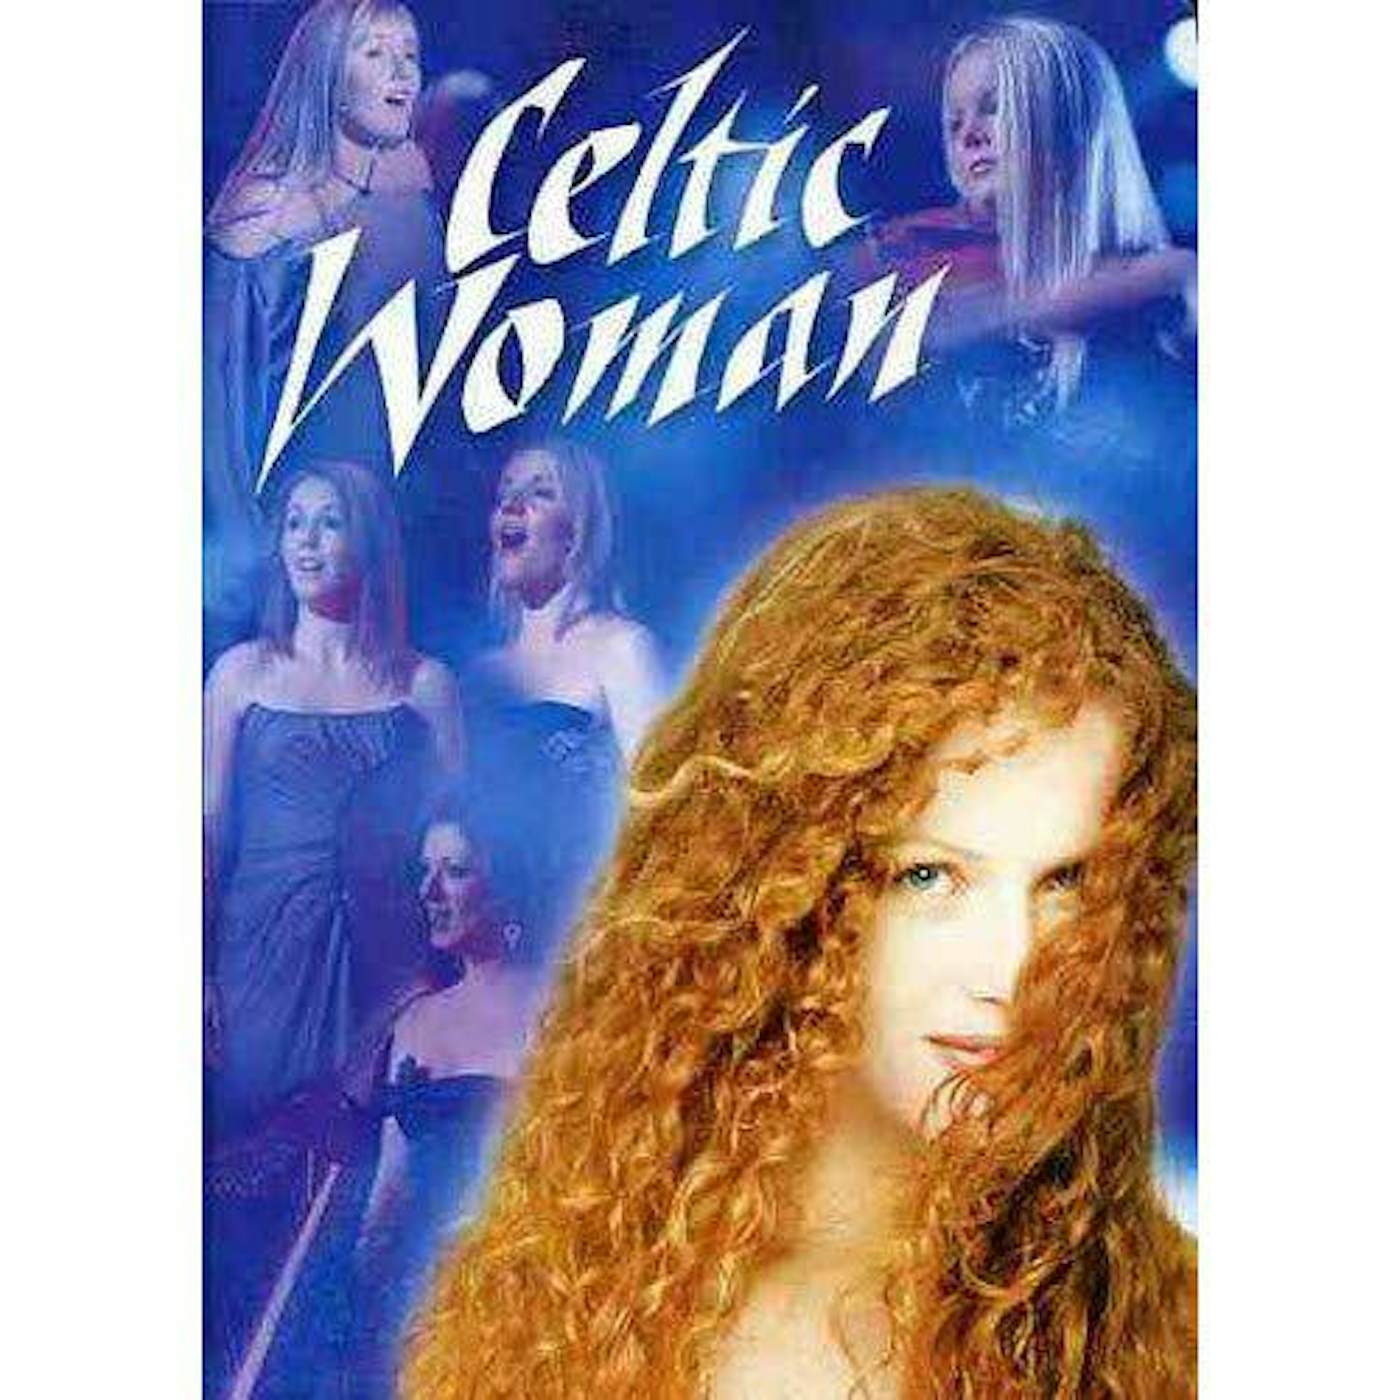  CELTIC WOMAN DVD